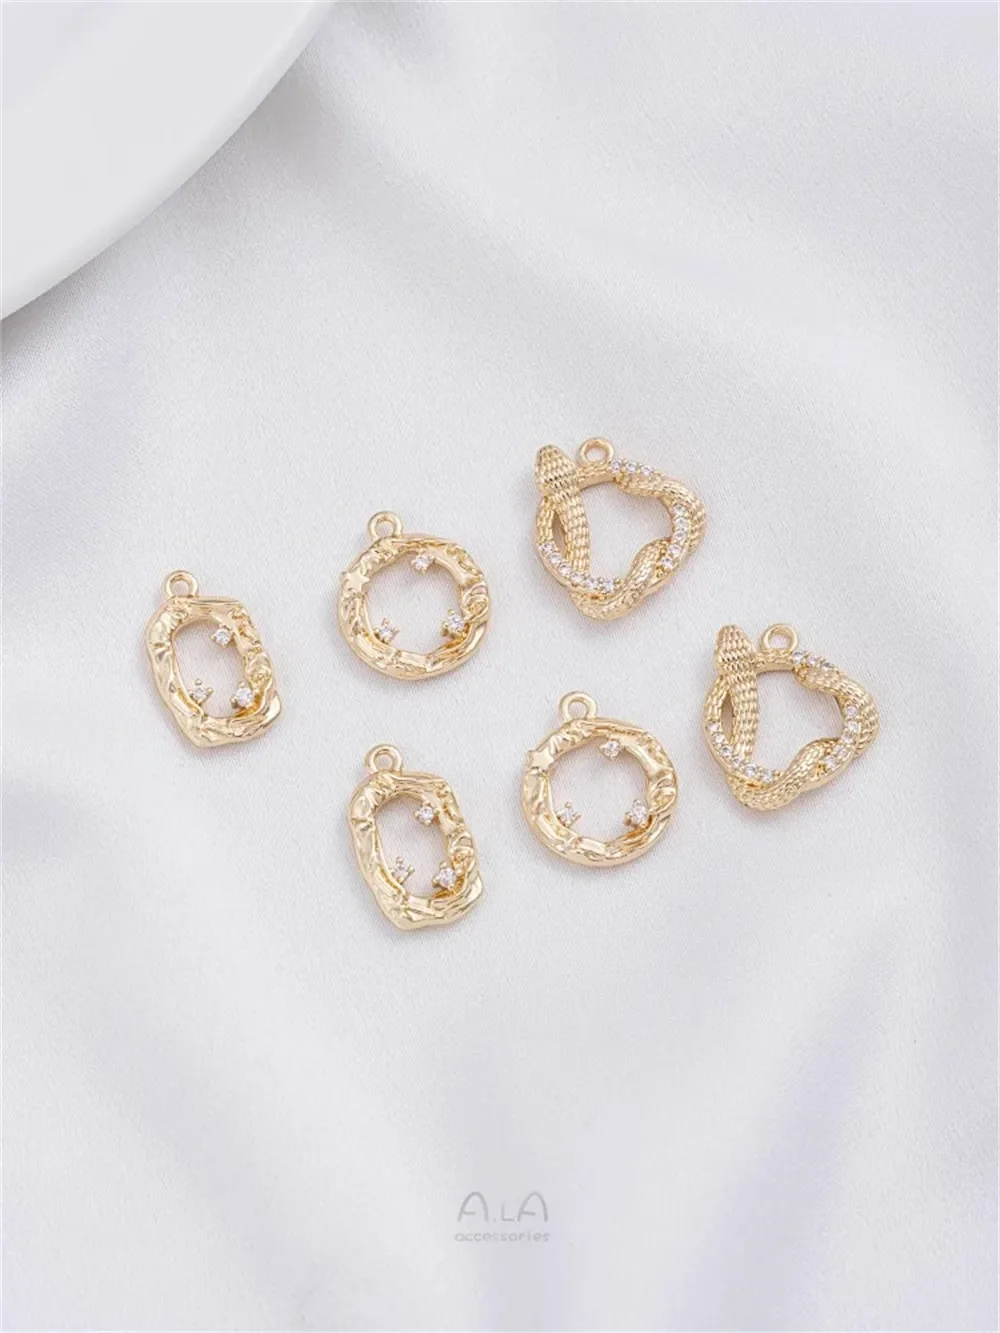 

14K Gold Inlaid Zirconium Rectangular Round Box Pendant Ring Necklace Earrings Diy Jewelry Charms Pendant K561